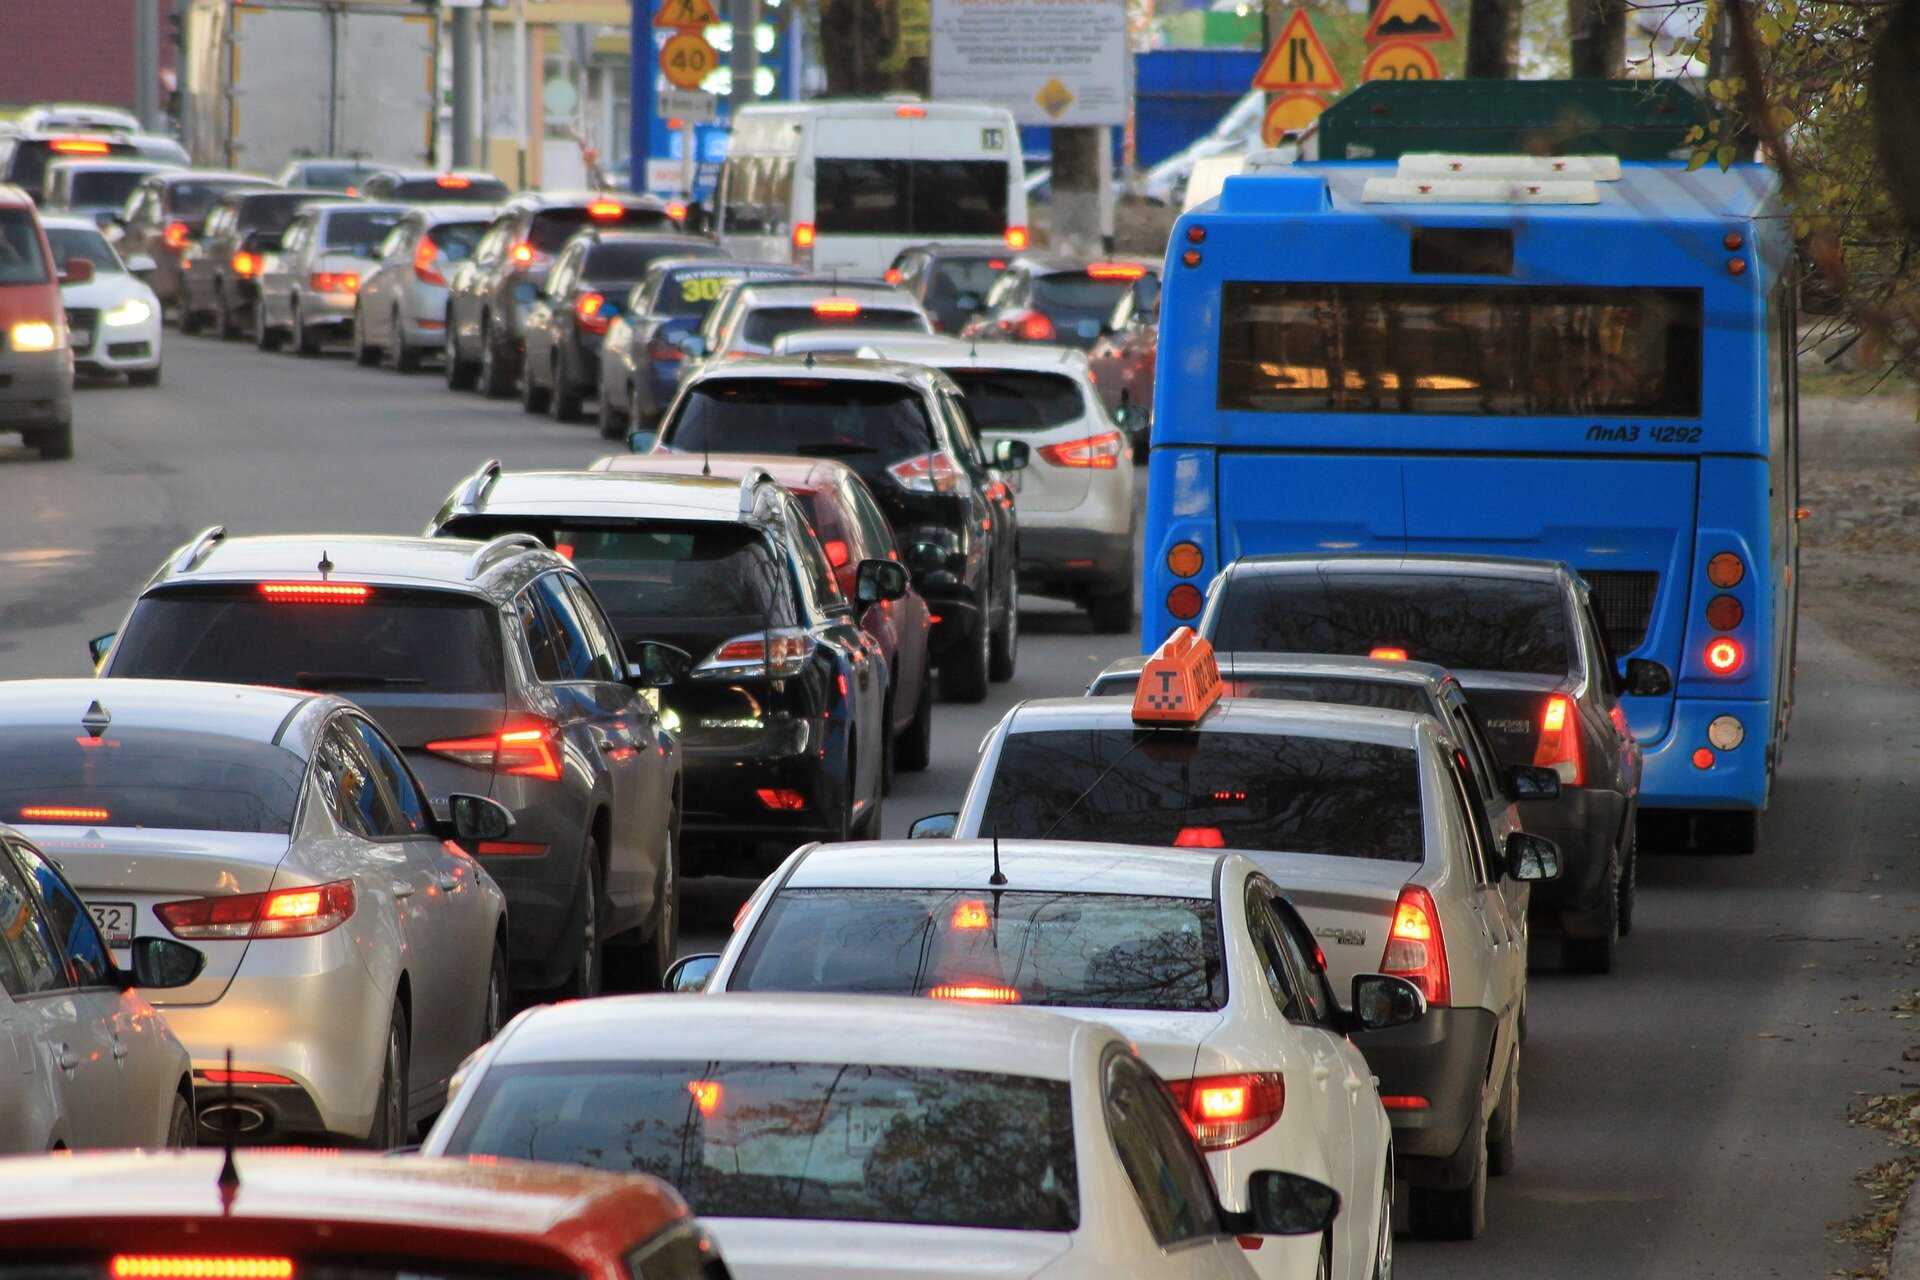 Do autonomous driving features really make roads safer?